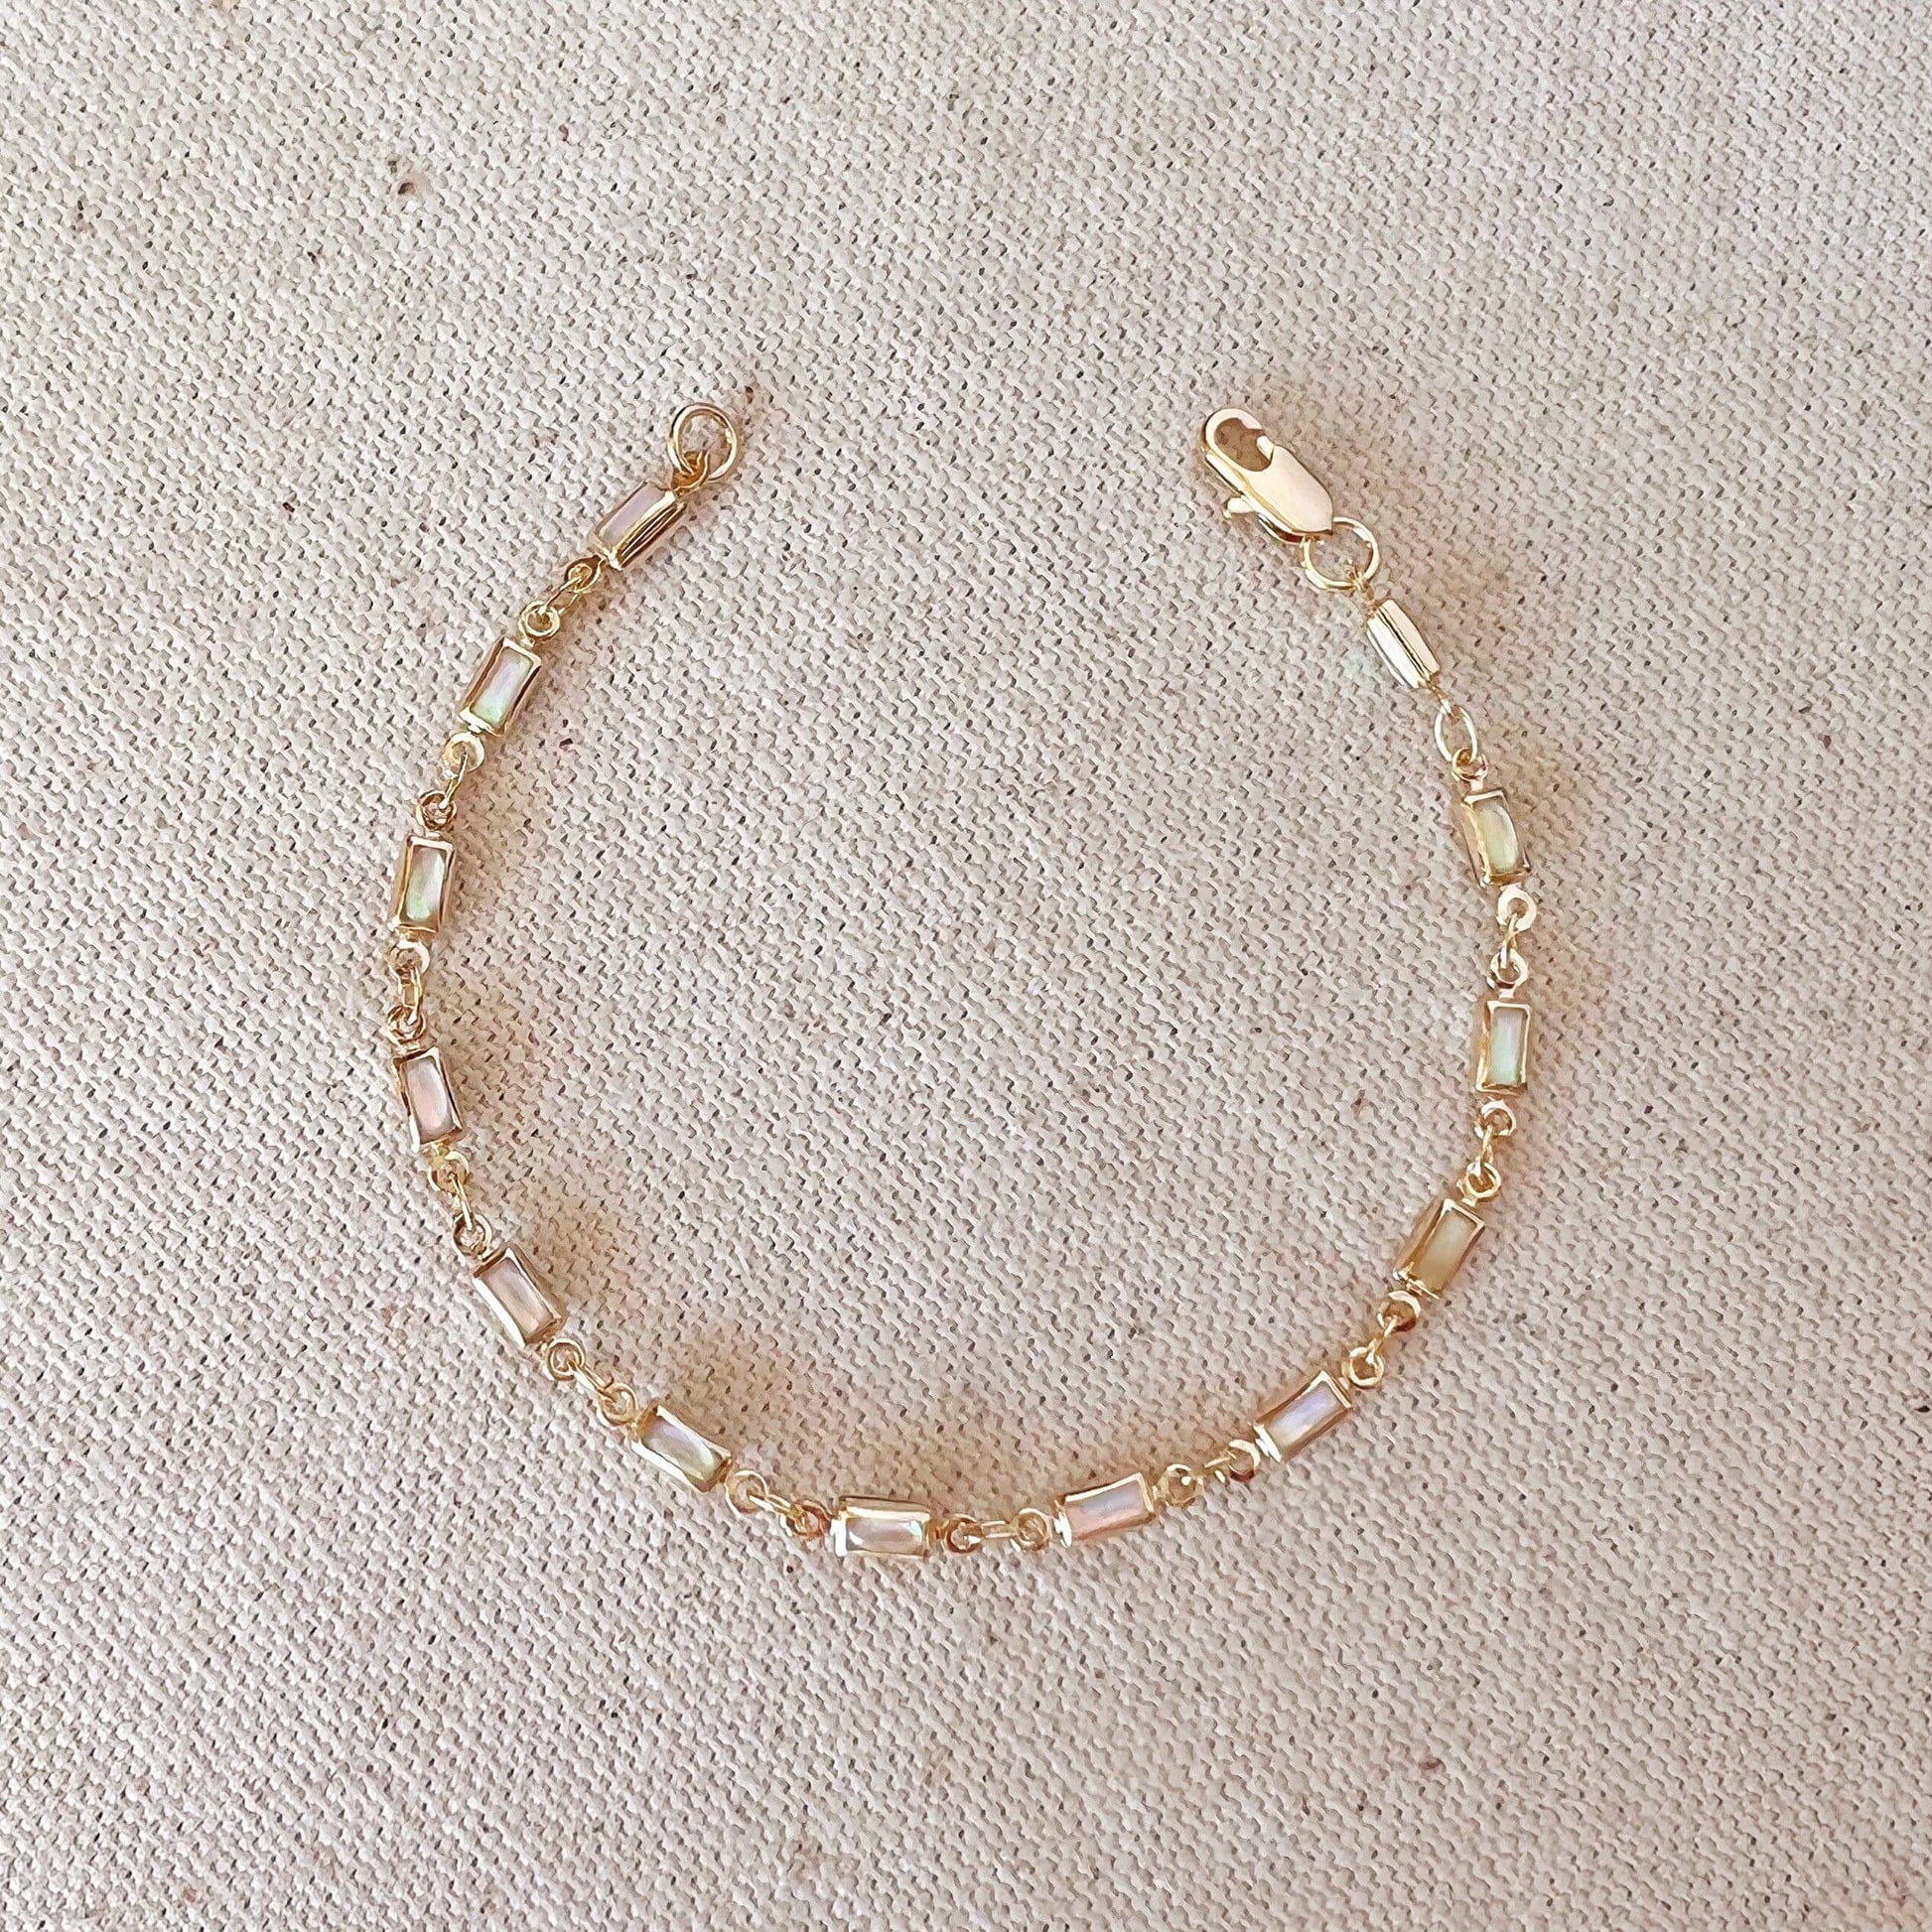 GoldFi 18k Gold Filled Opal Bracelet